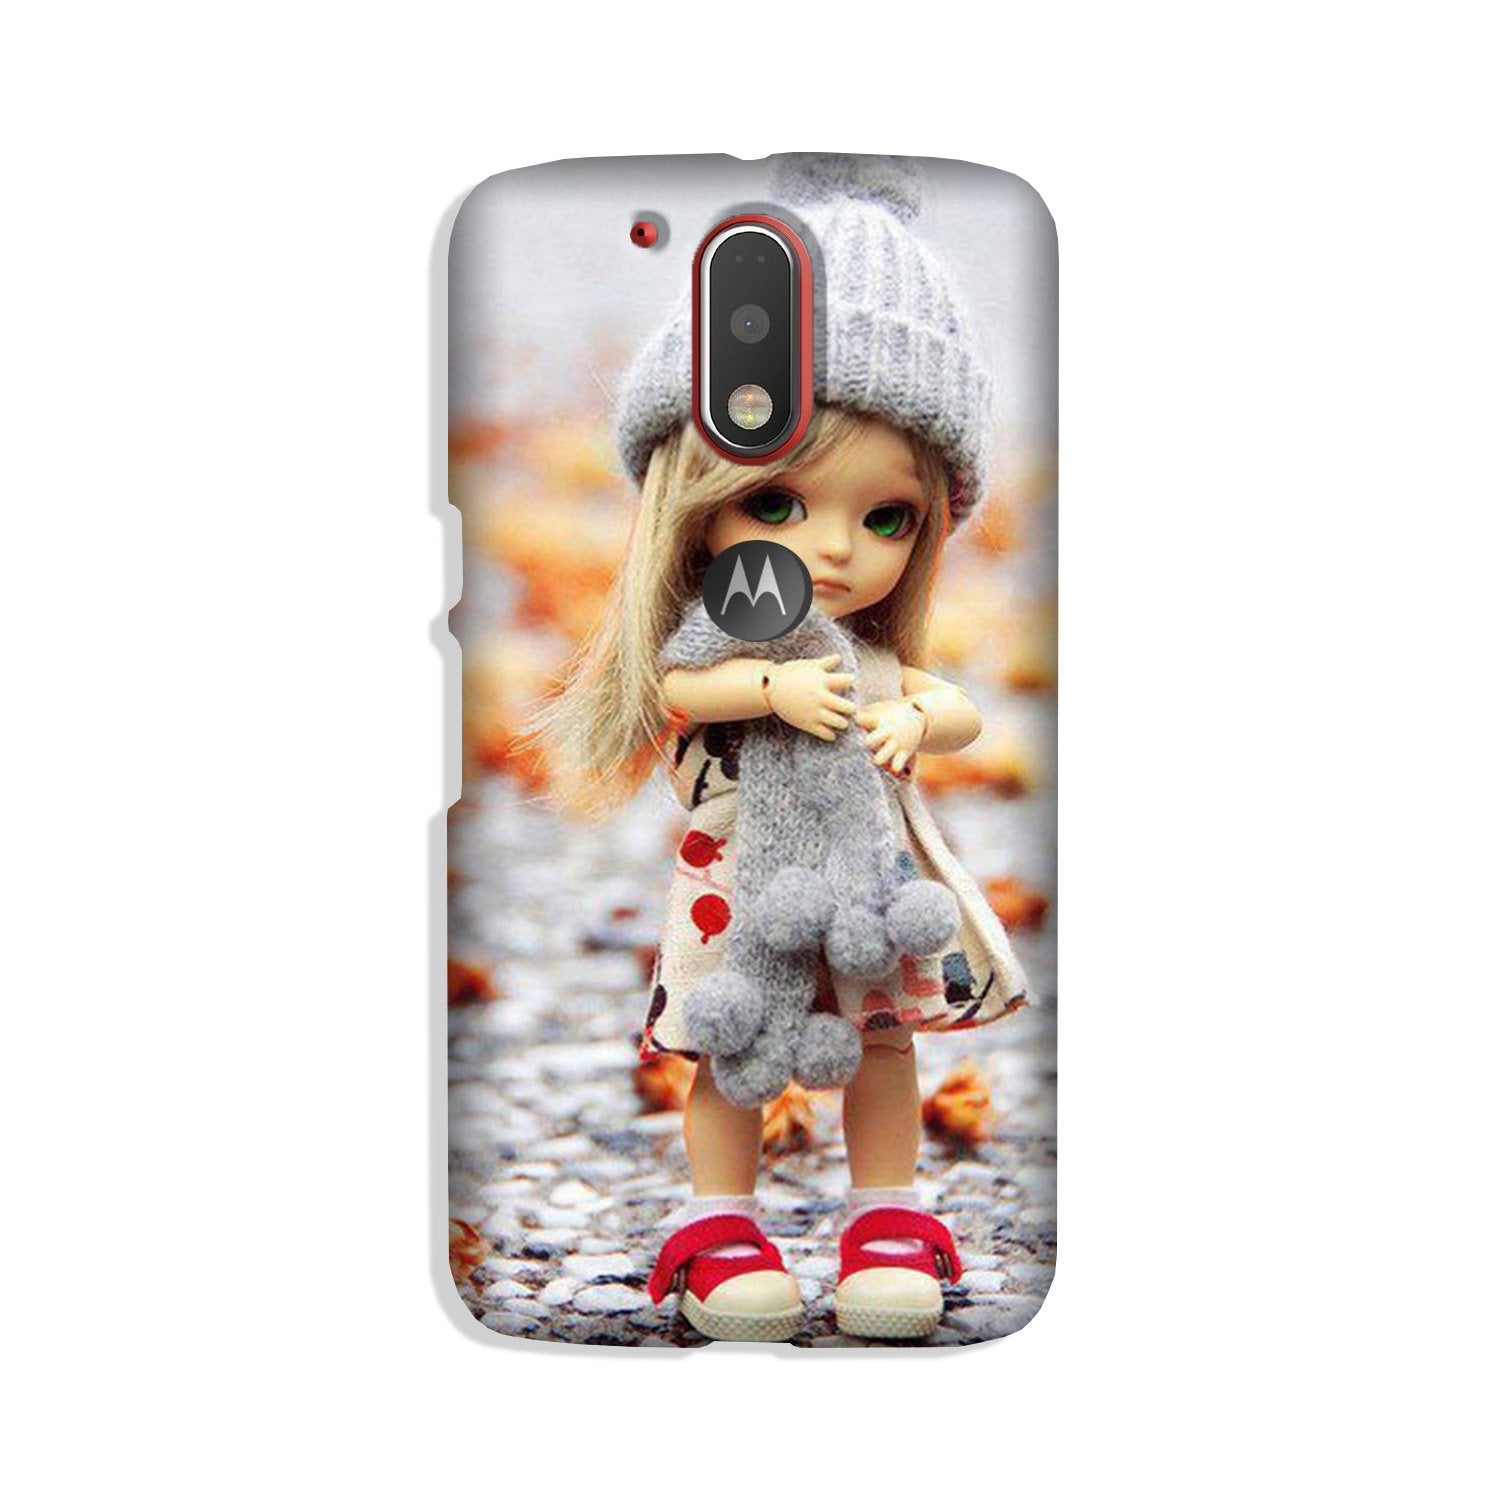 Cute Doll Case for Moto G4 Plus